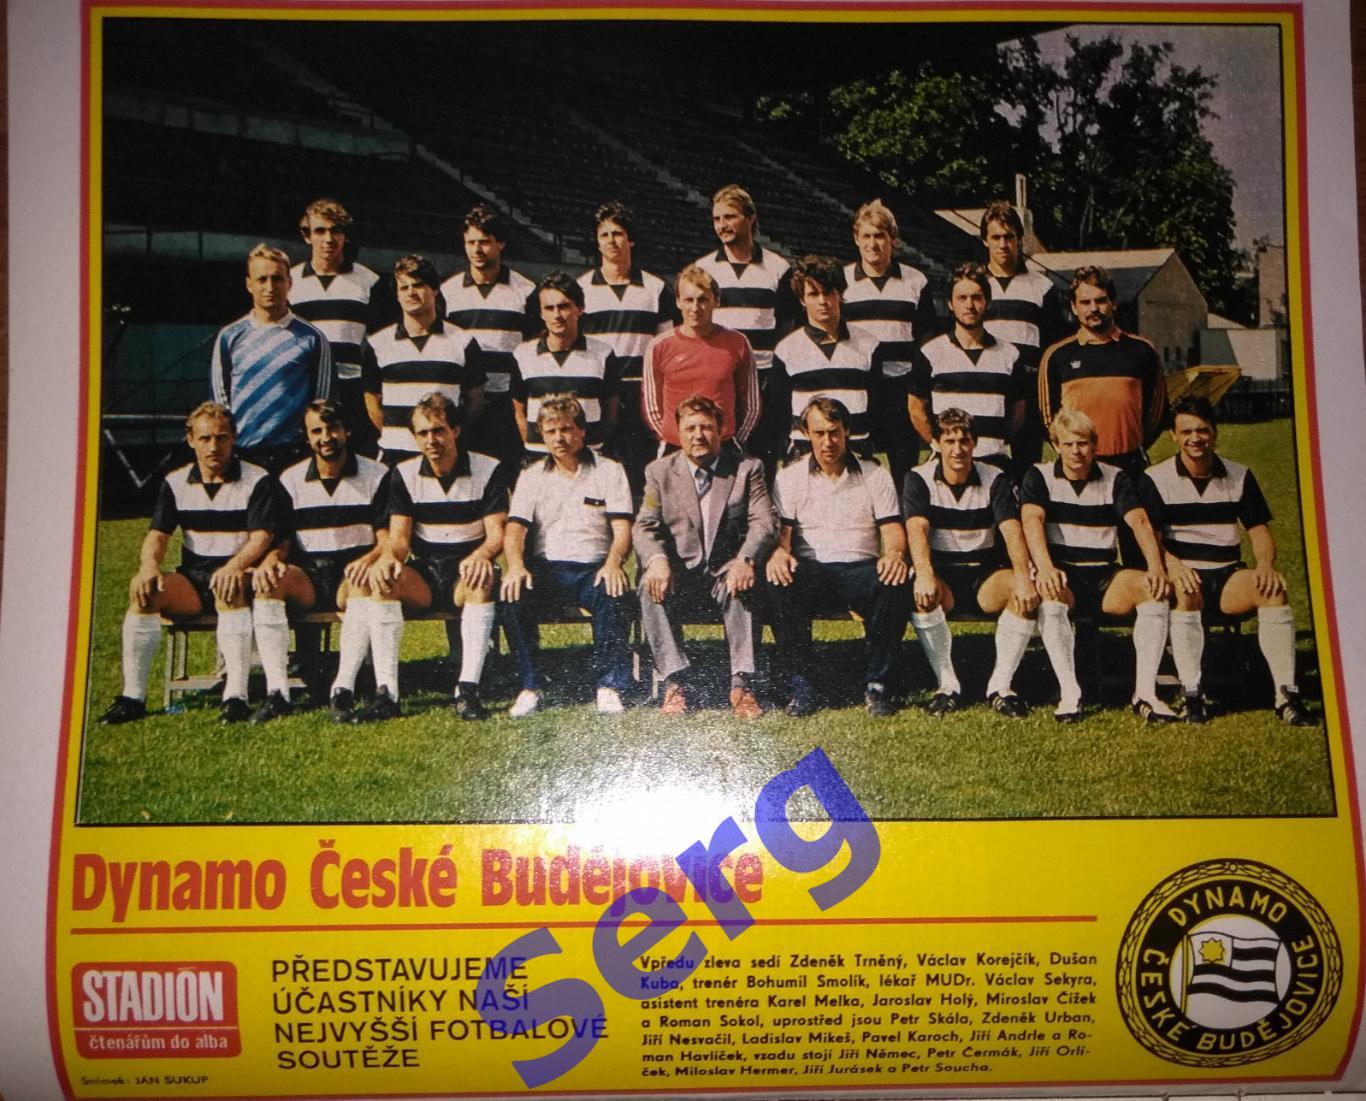 Журнал Стадион (Stadion) №46 1986 год 3